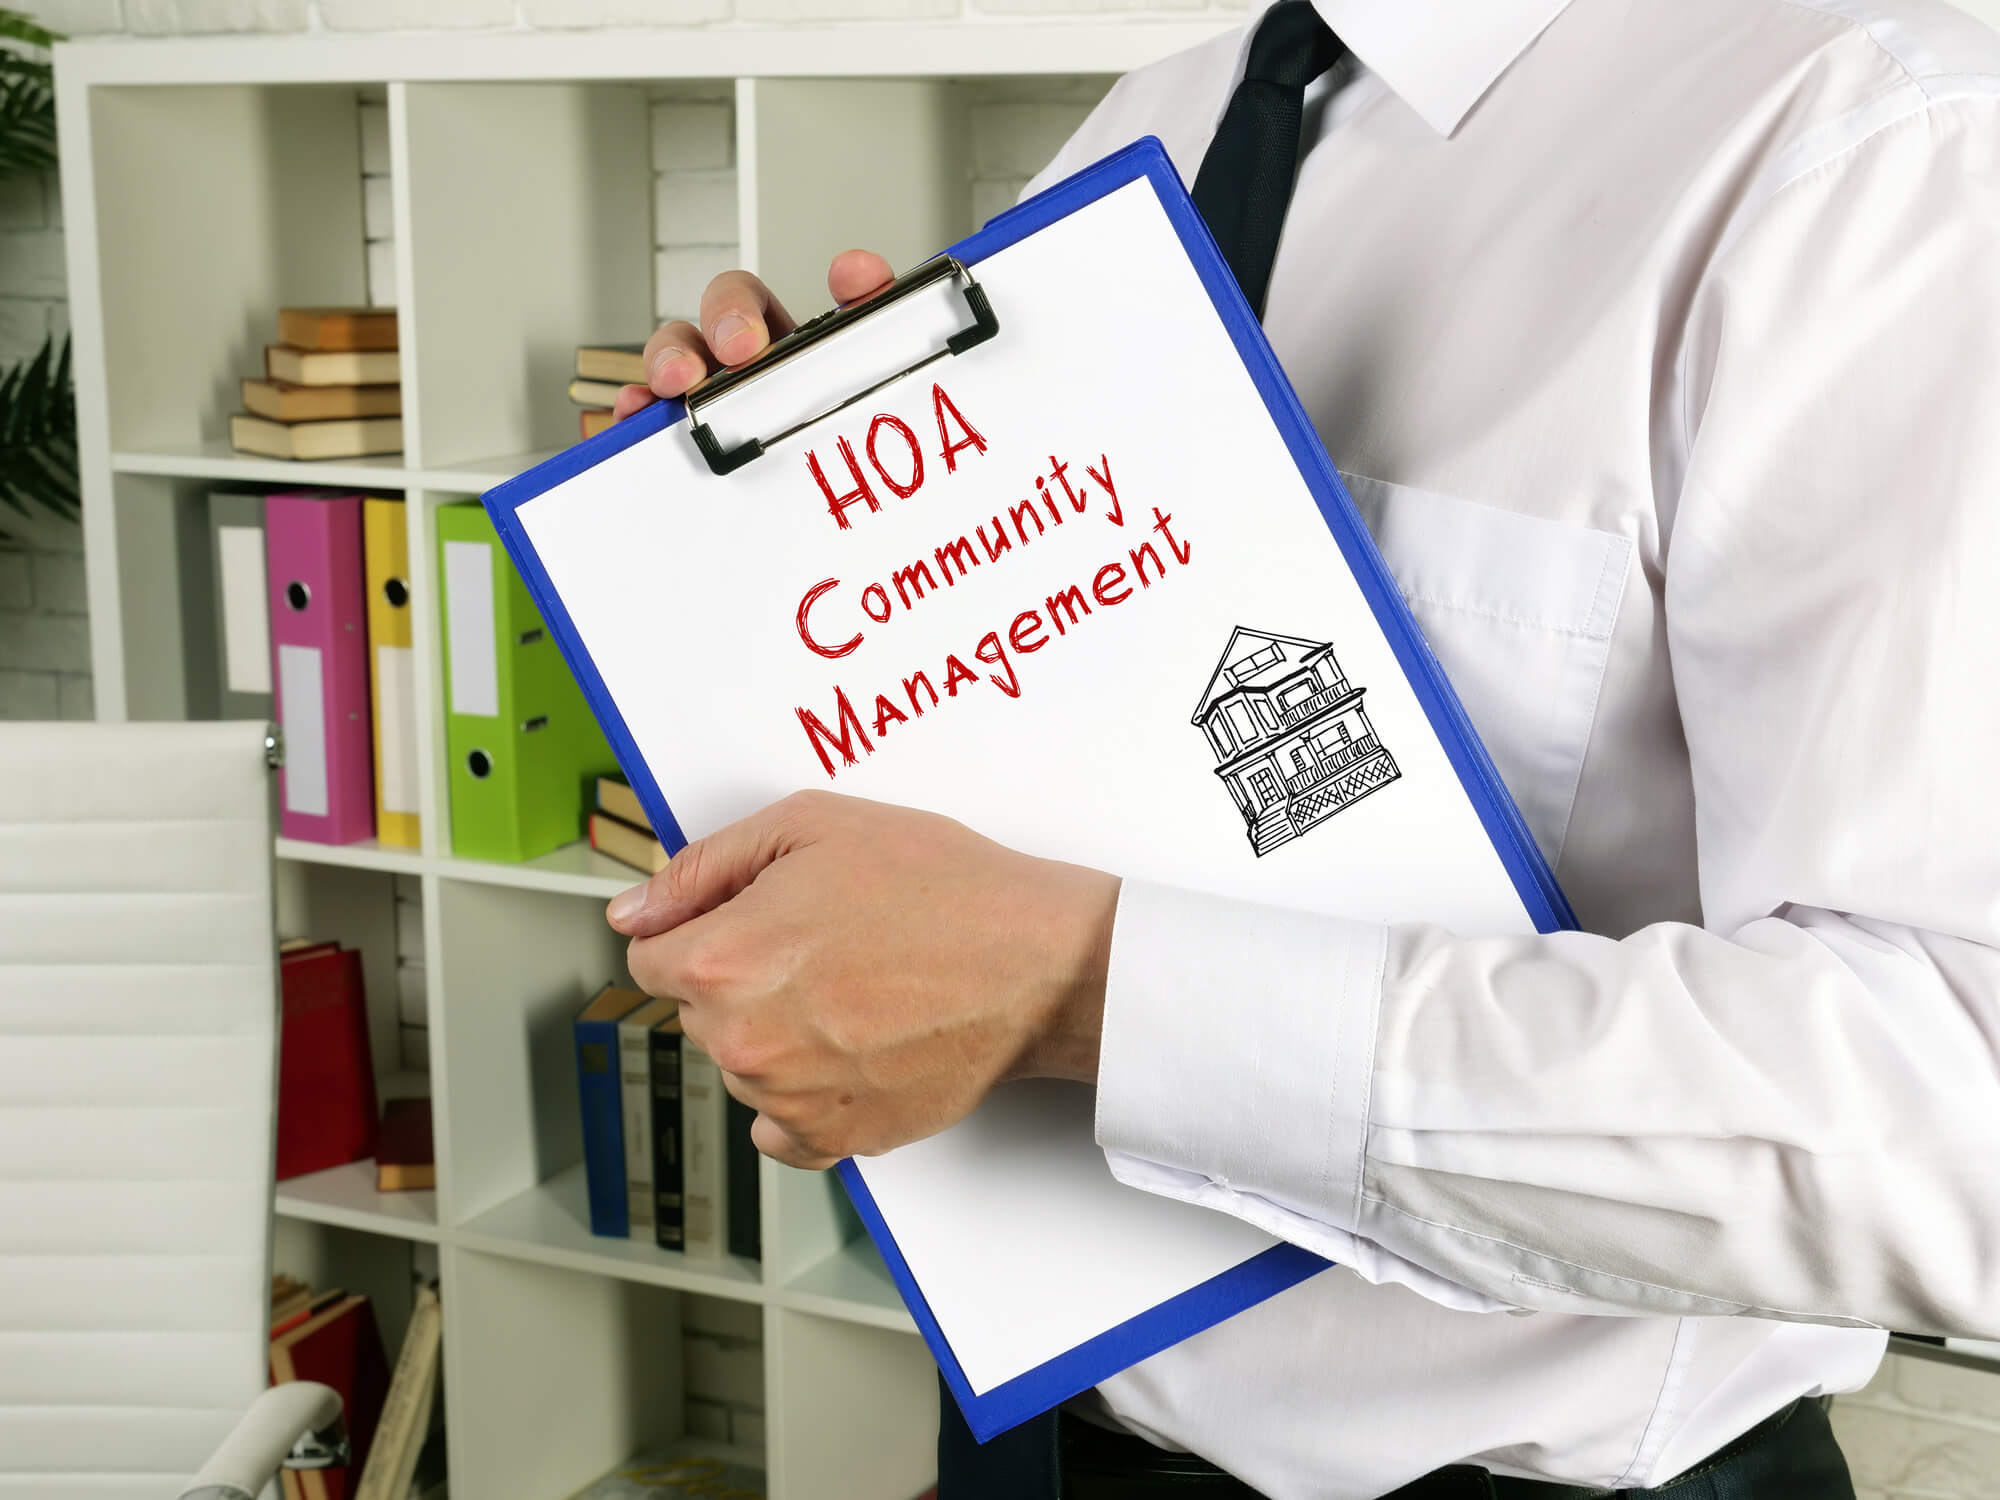 Homeowner Association HOA Community Management inscription on the sheet.